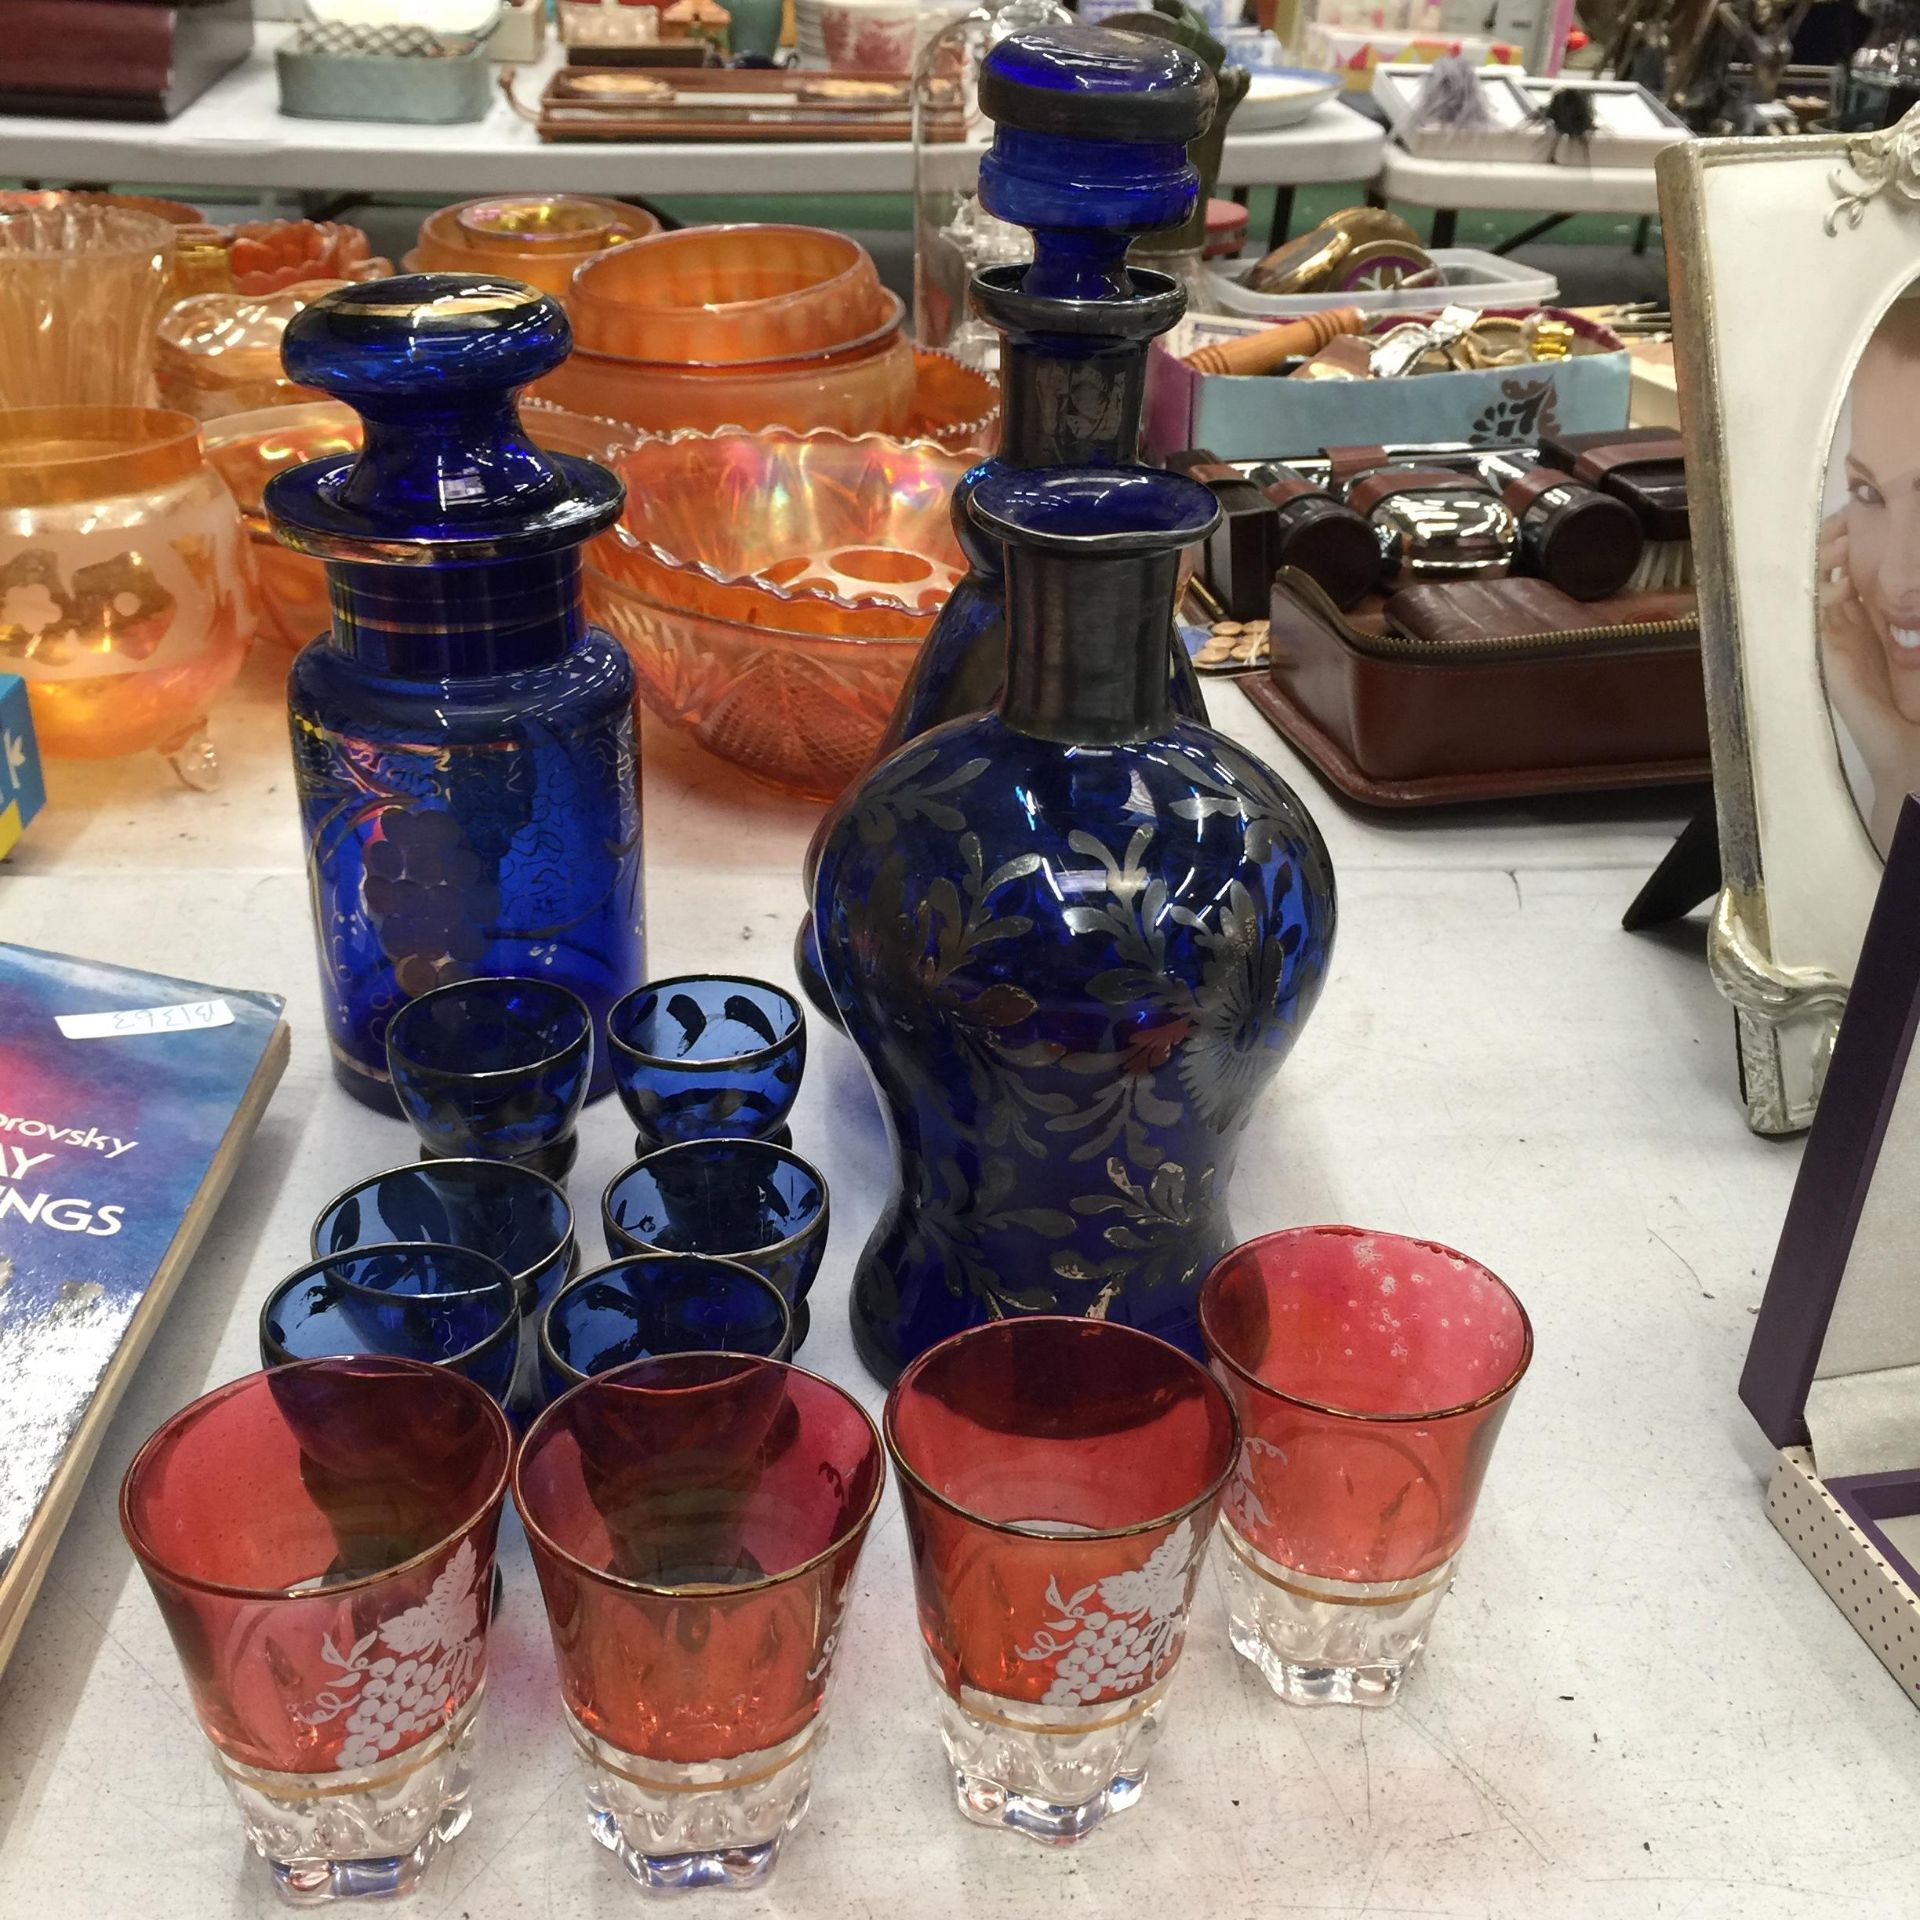 A VINTAGE BLUE GLASS WITH GILT DECORATION DECANTER, STORAGE JAR, VASE AND GLASSES PLUS FOUR